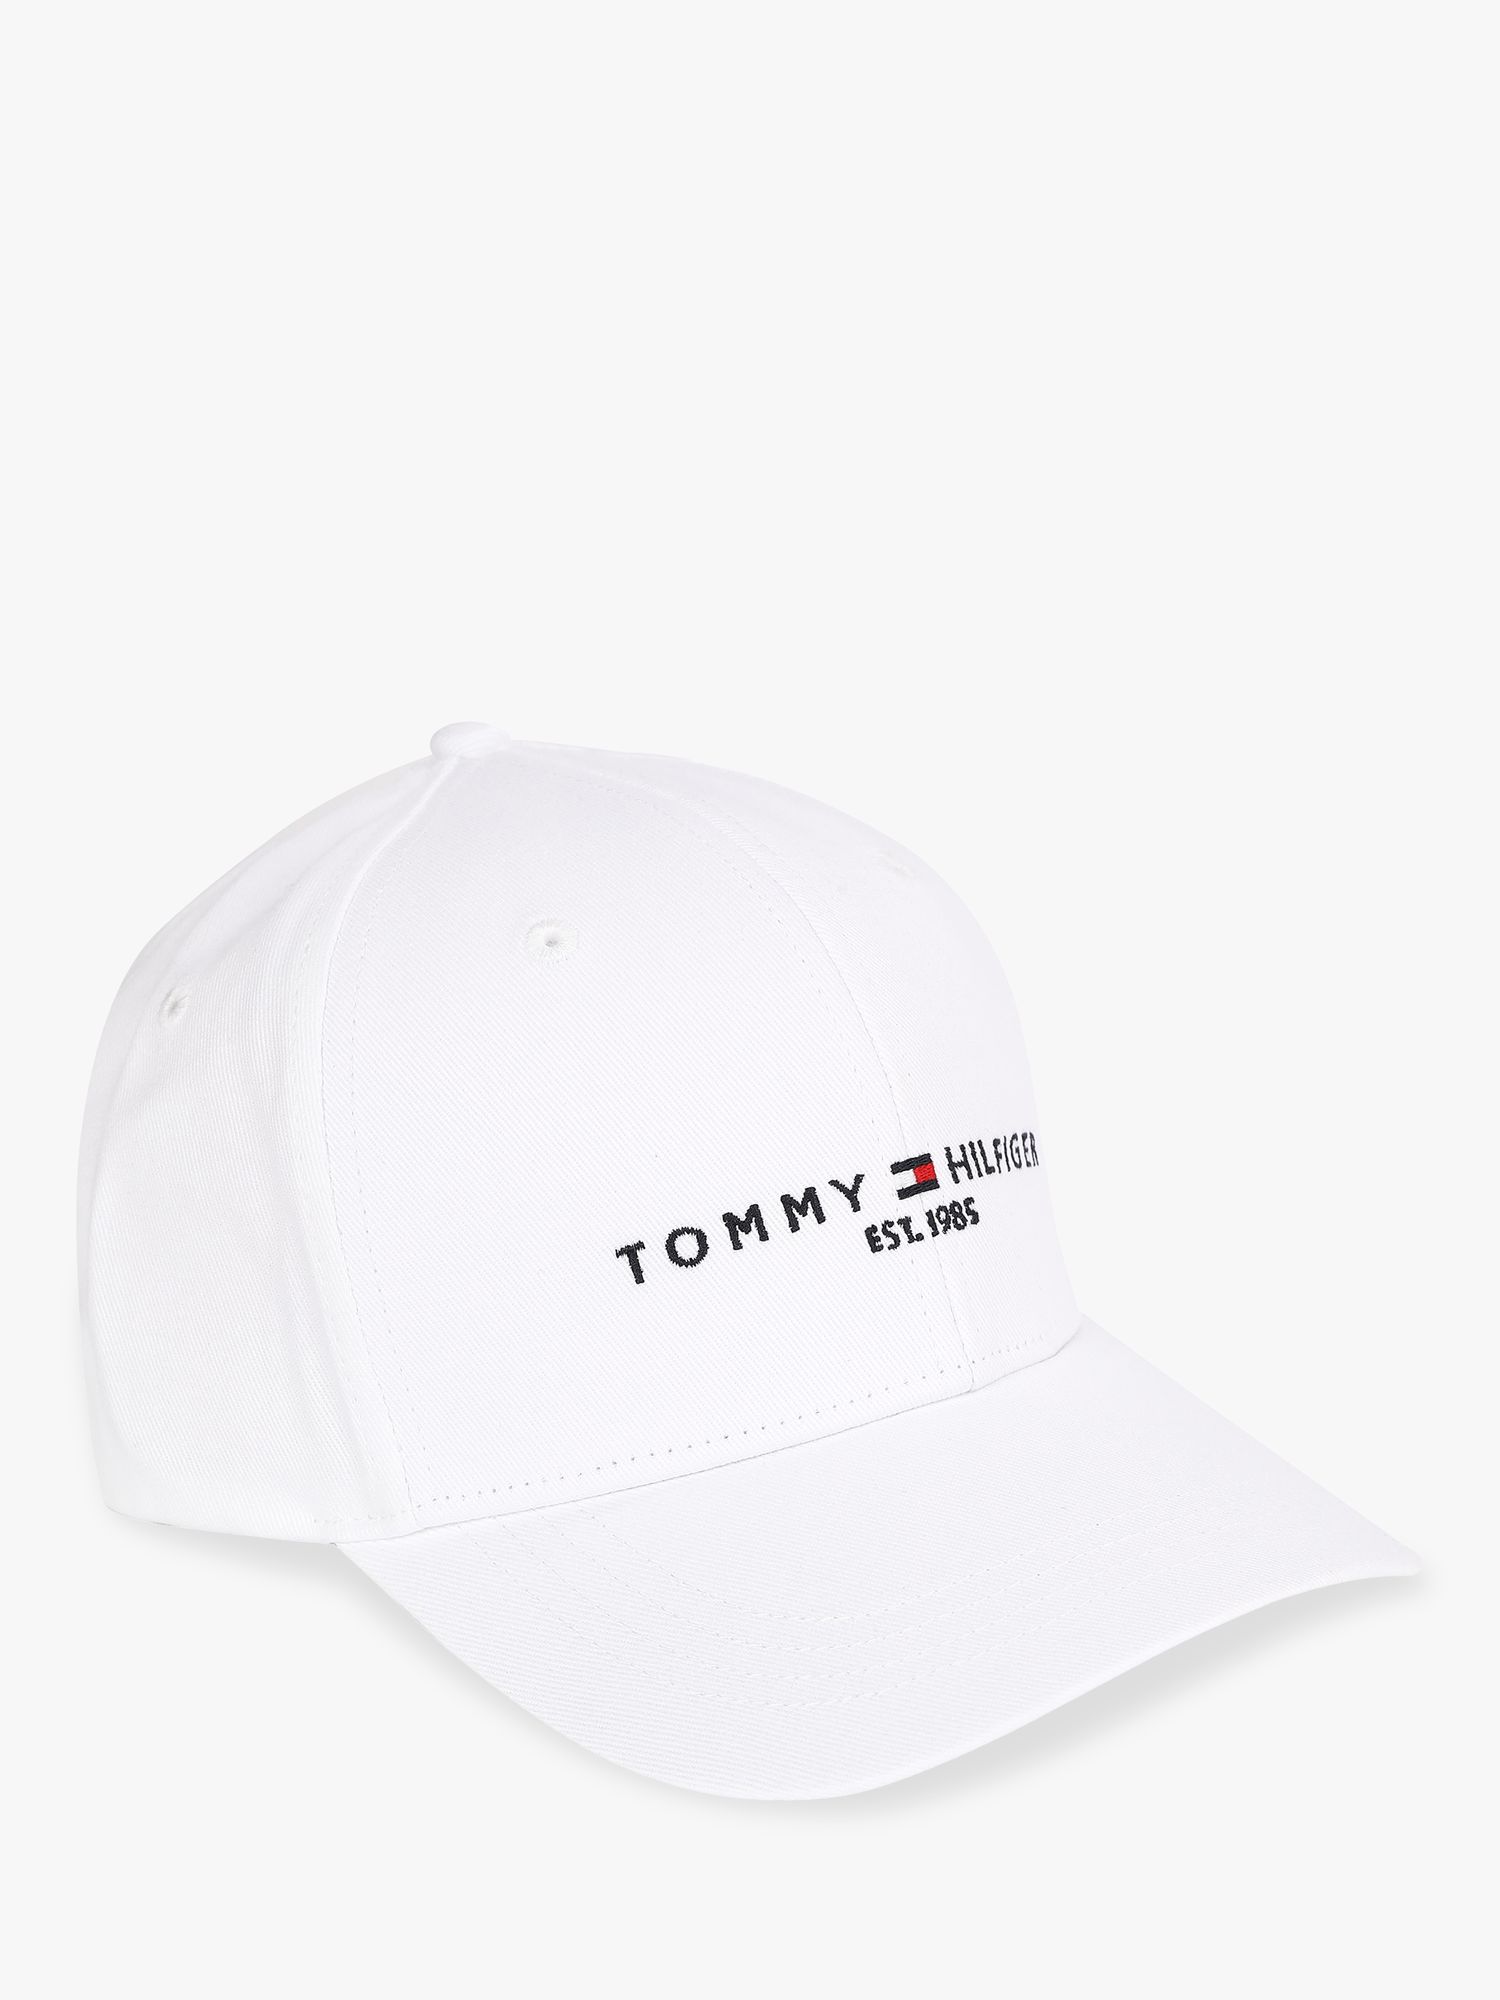 Tommy Hilfiger Established Organic Cotton Baseball Cap, One Size, White